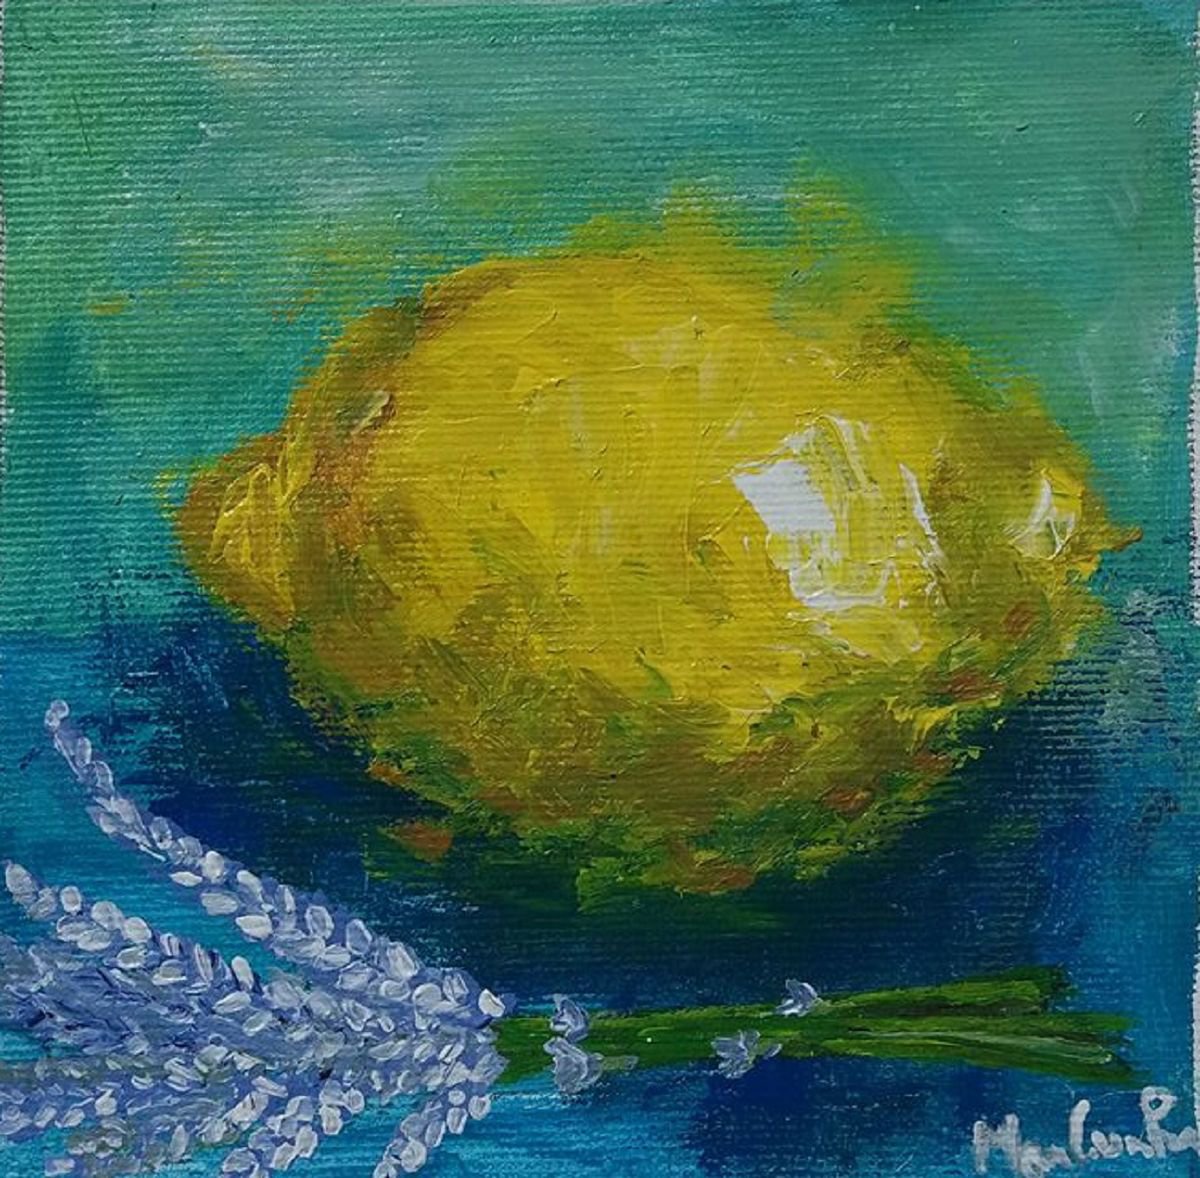 Lemon and lavender by Maria Cunha